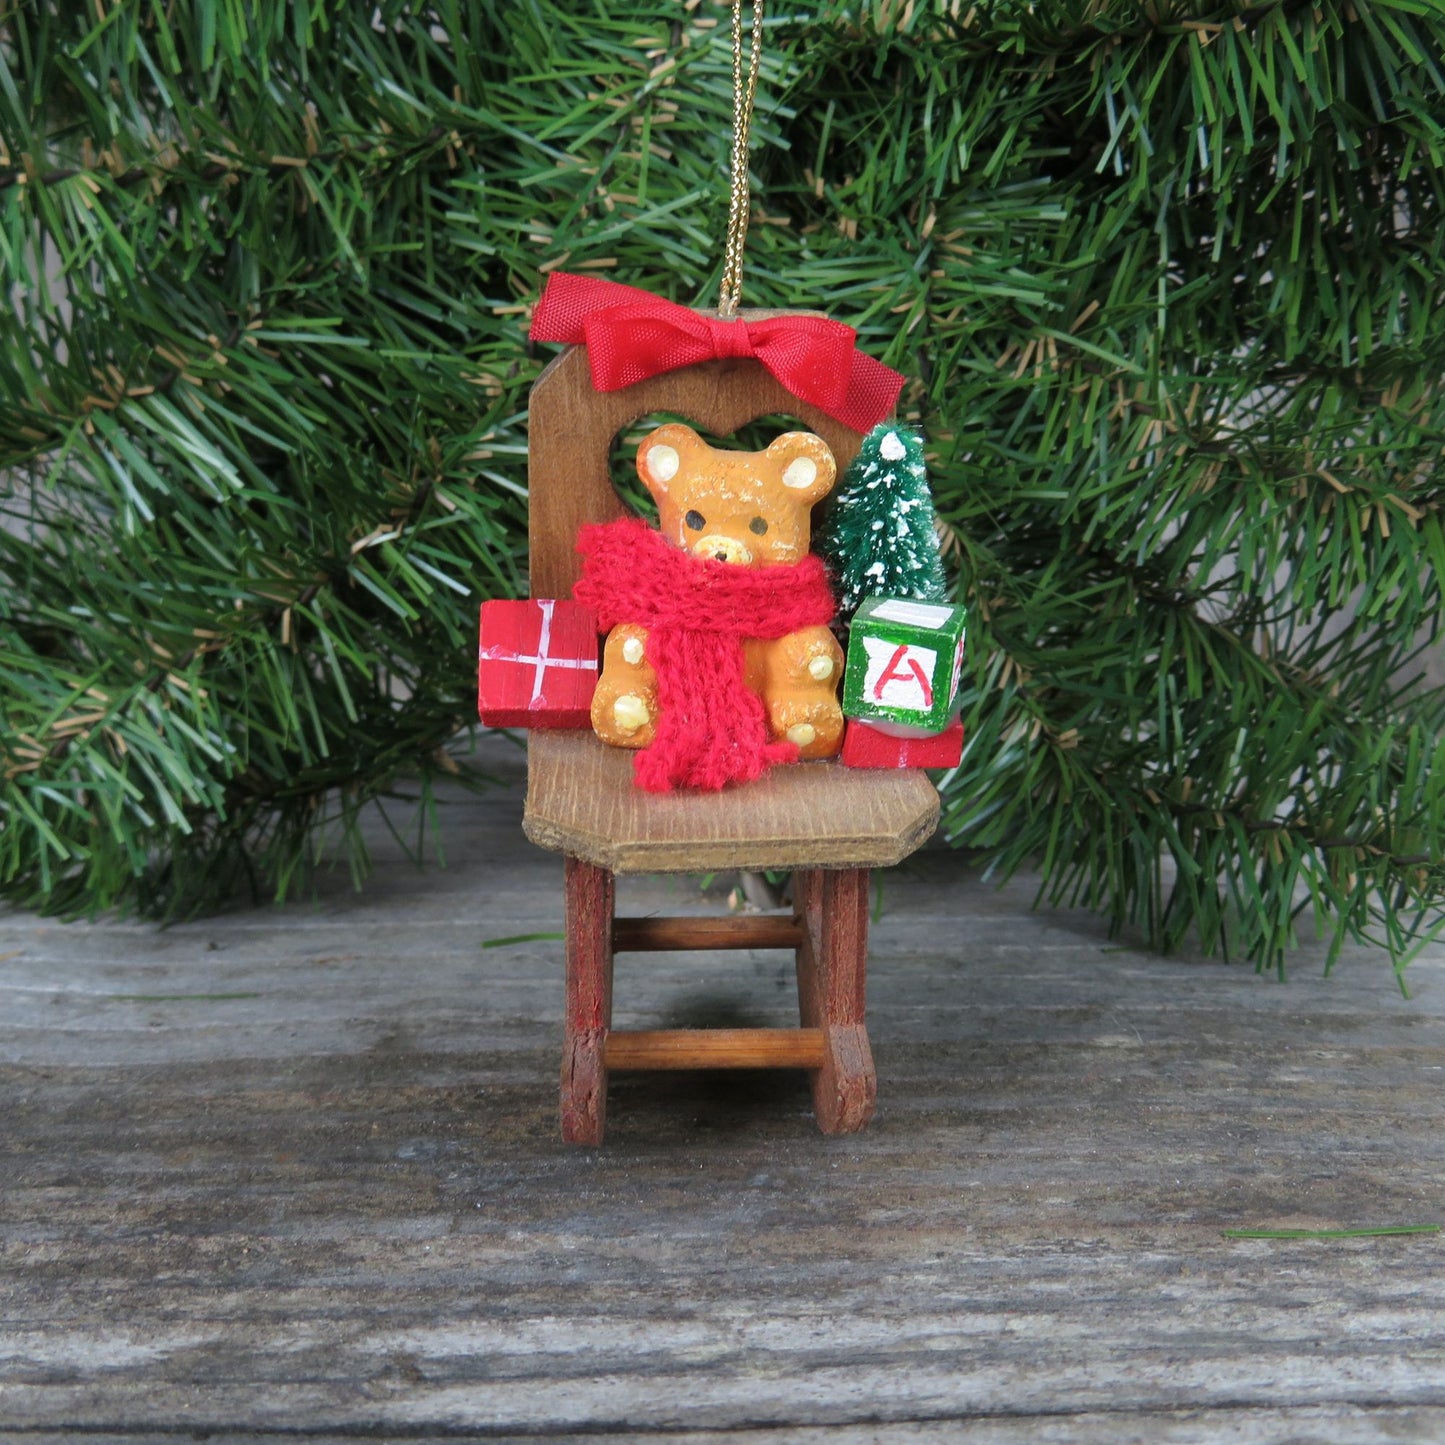 Vintage Wood Rocking Chair Ornament Teddy Bear Bottle Brush Tree Wooden Christmas